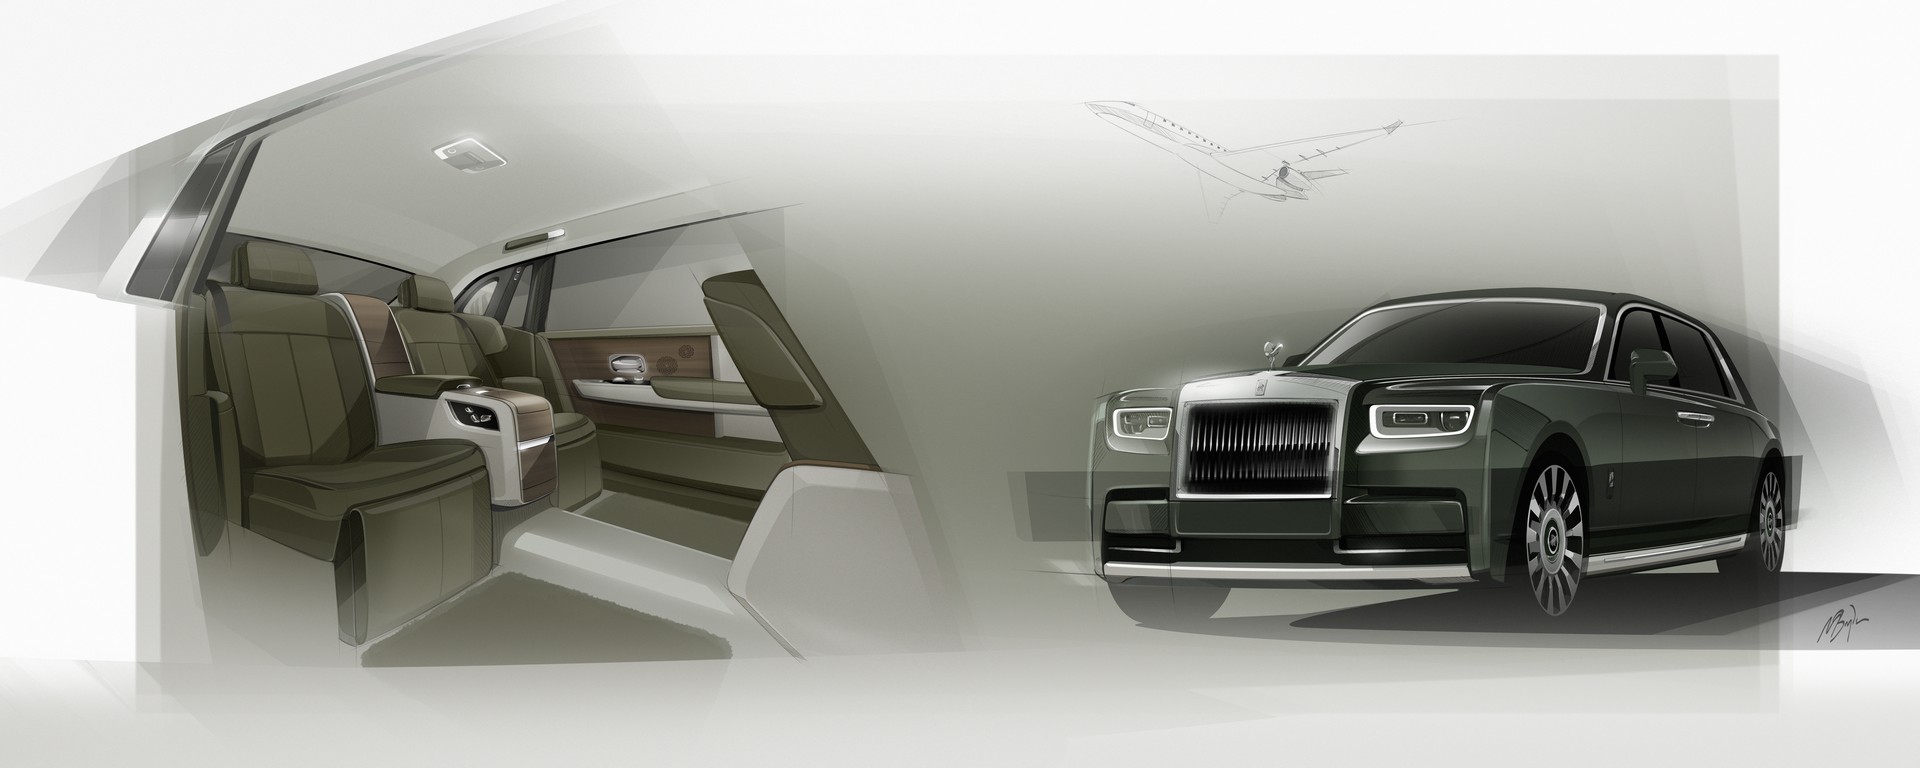 Độc bản Rolls-Royce Phantom Oribe của tỷ phú Nhật Bản rolls-royce-phantom-oribe-32.jpg